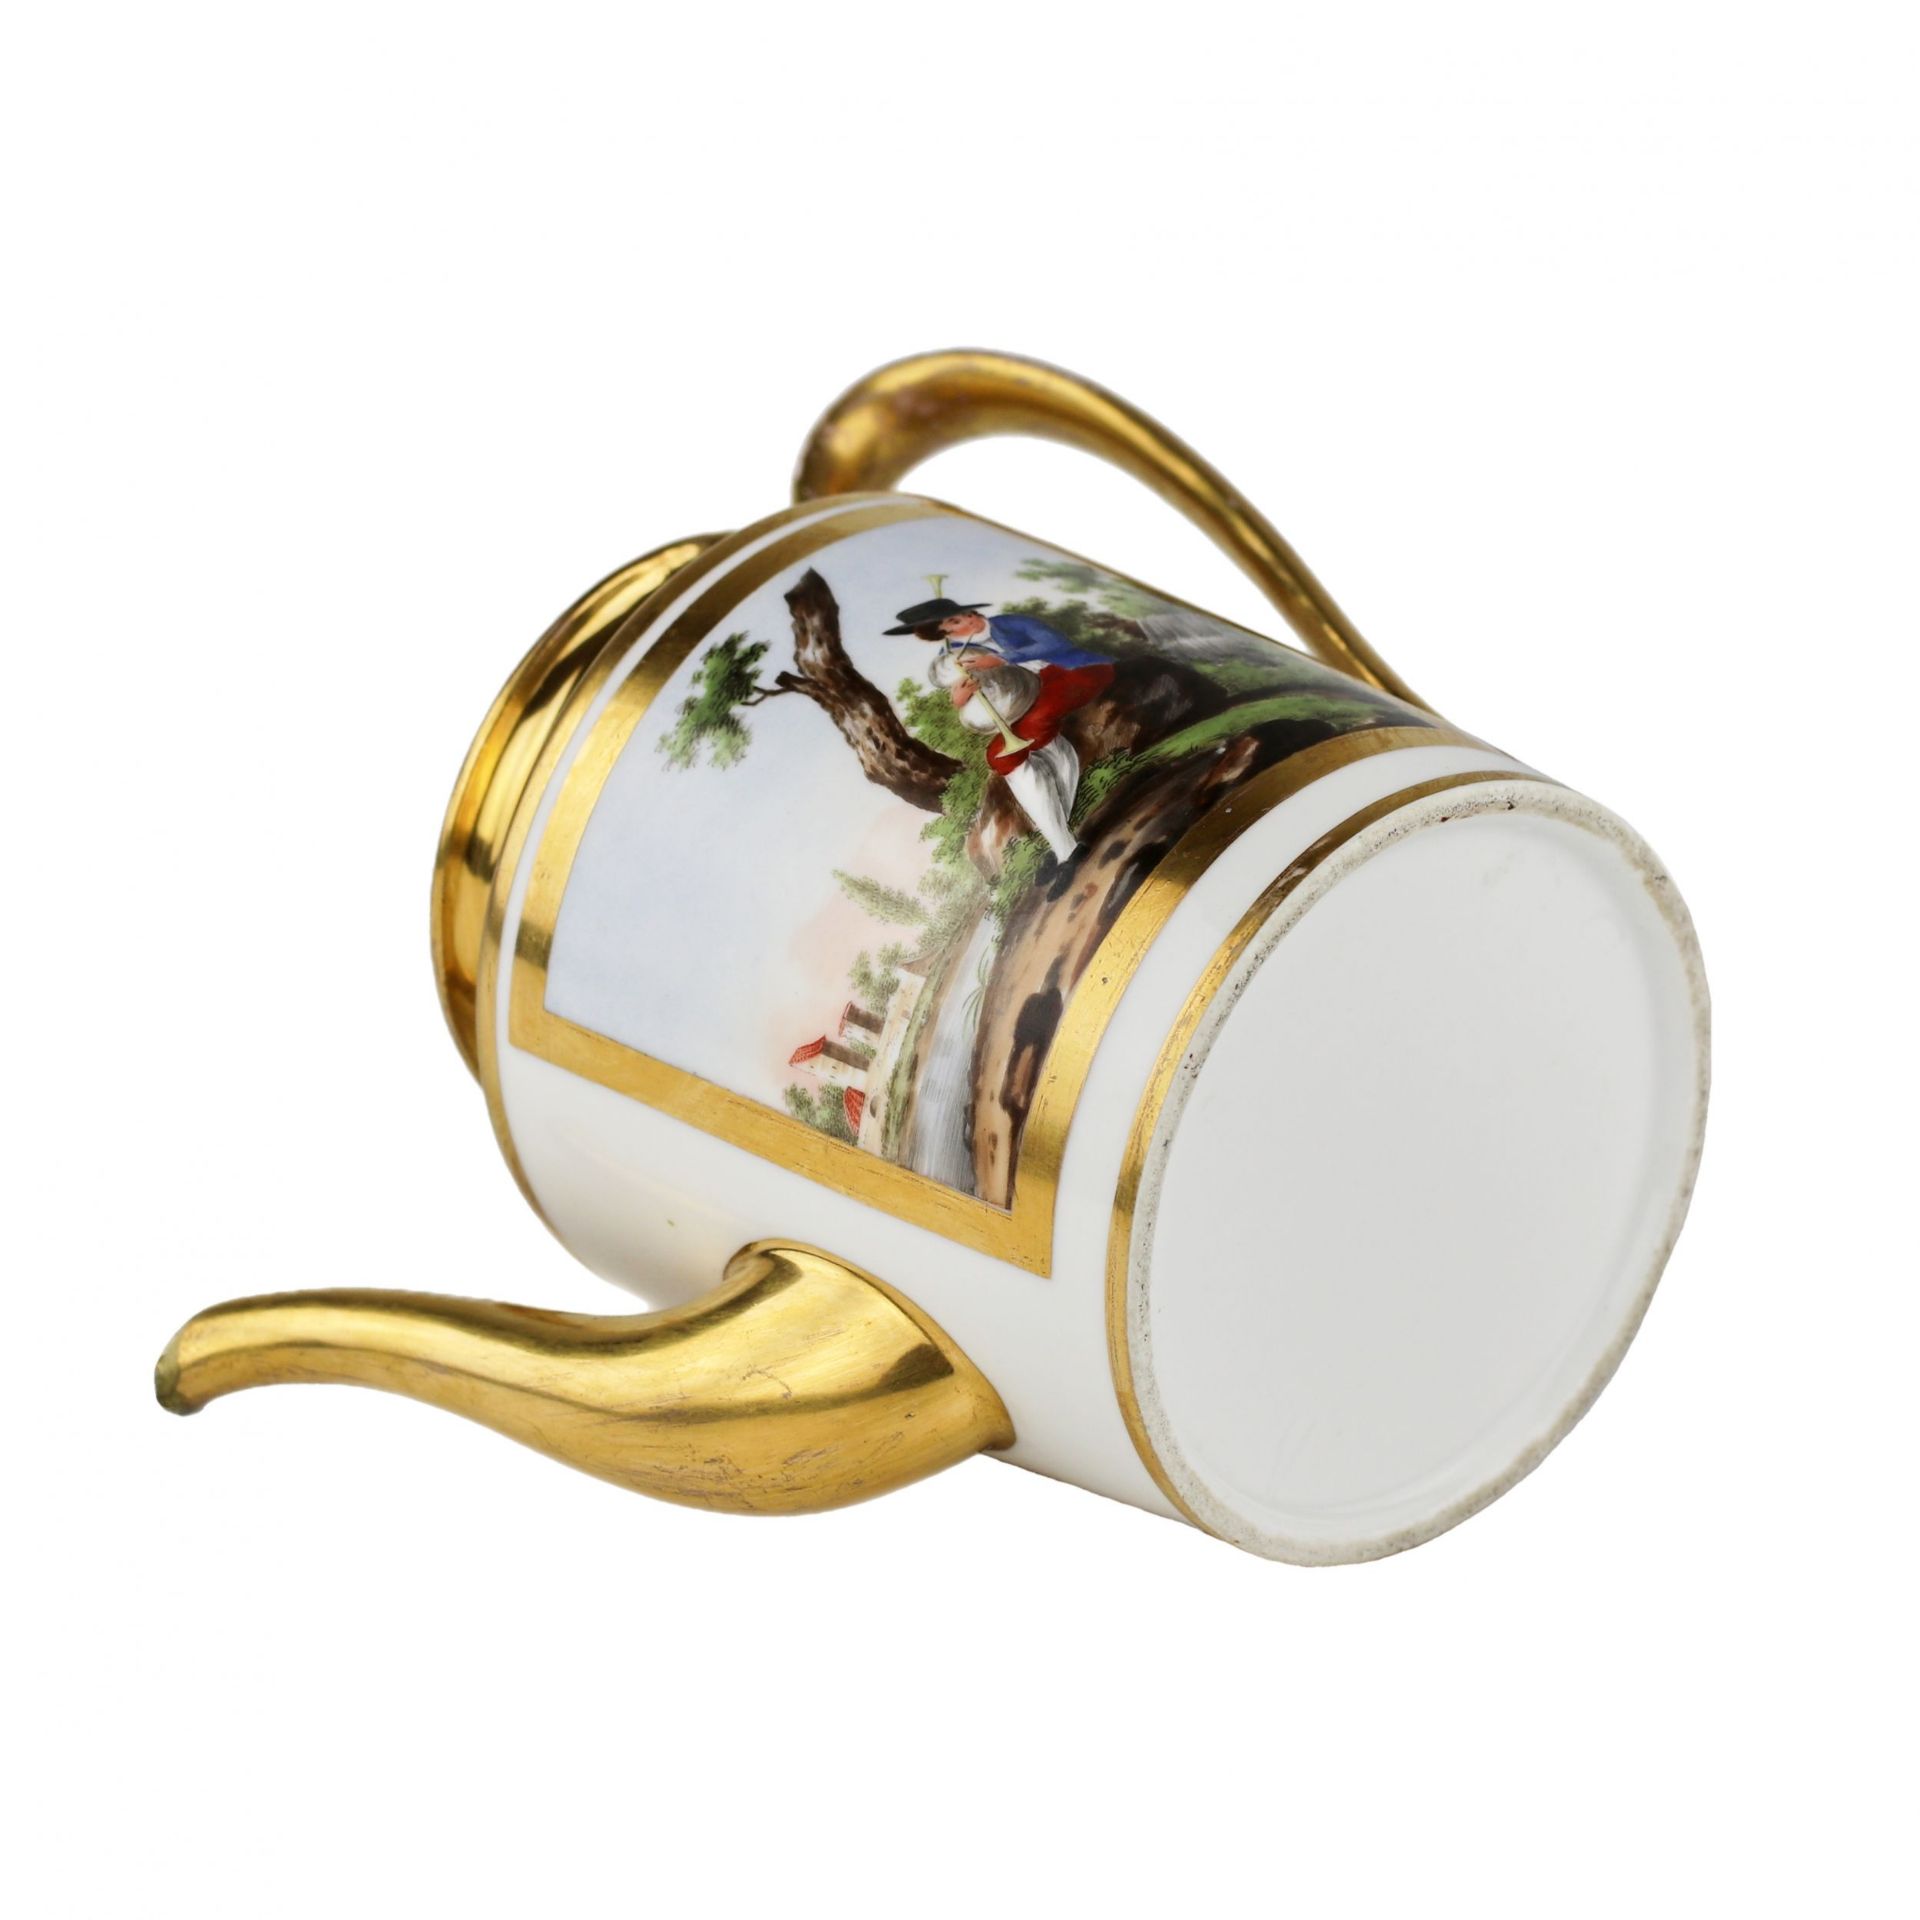 Gardner porcelain teapot. Russia, 1820-1830s - Image 7 of 7